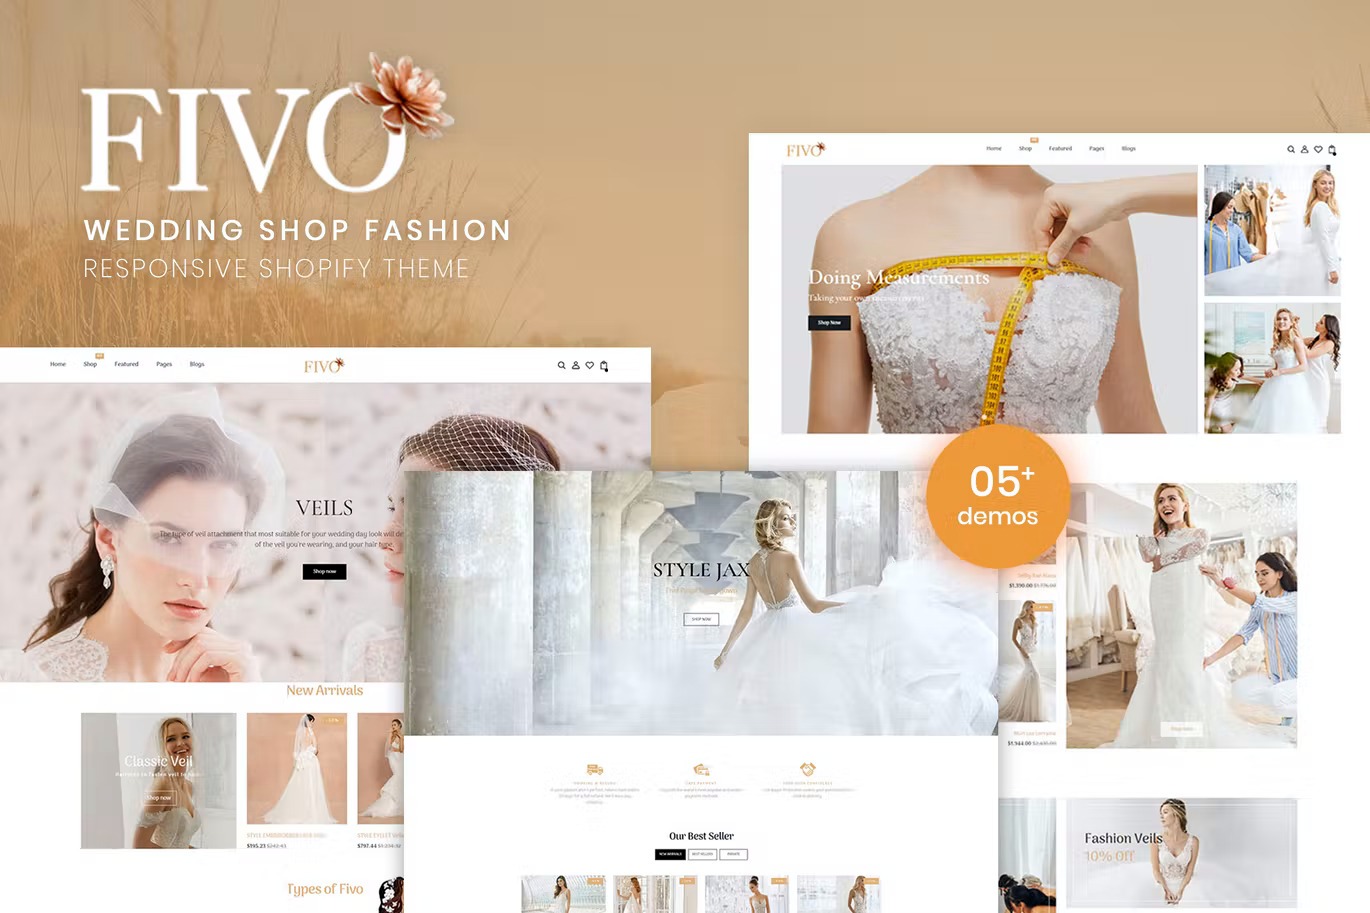 Fivo - Wedding Shop Fashion Shopify Theme